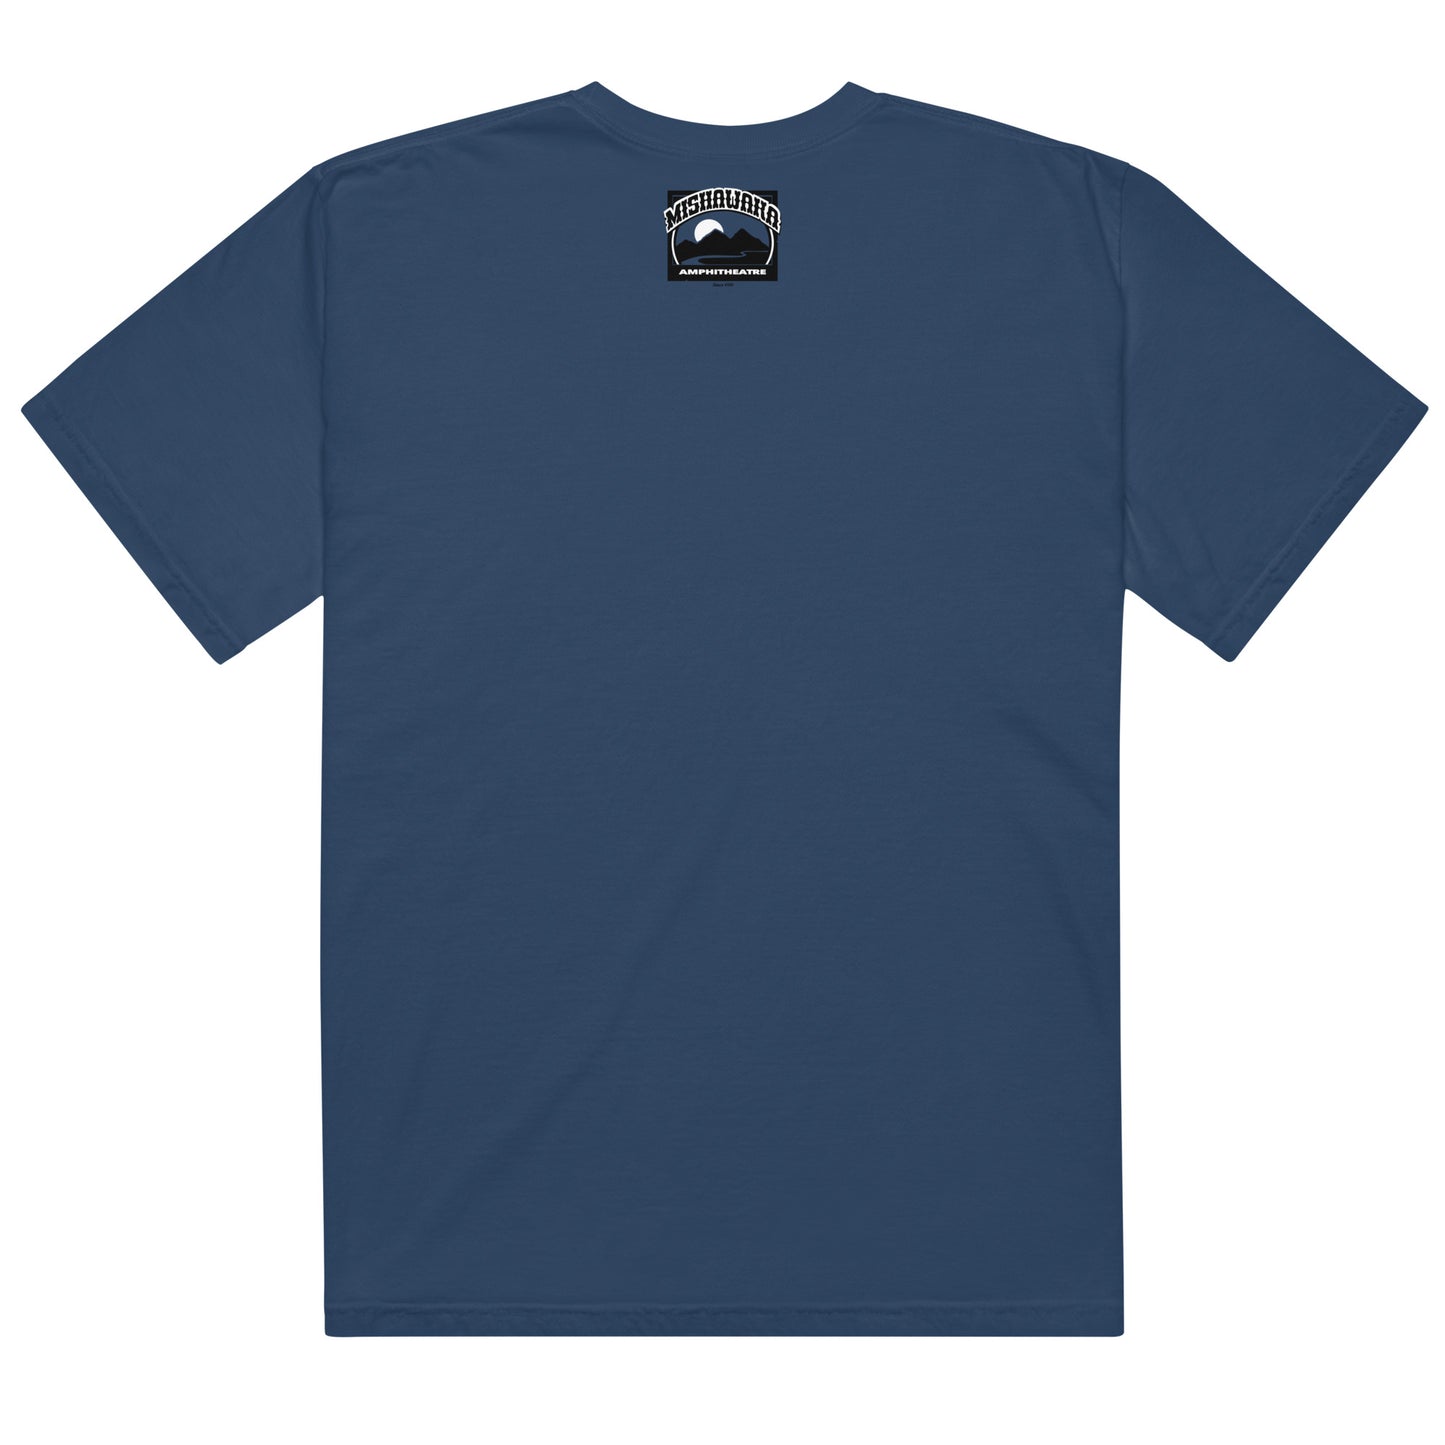 Mishawaka Hummingbird Unisex T-Shirt